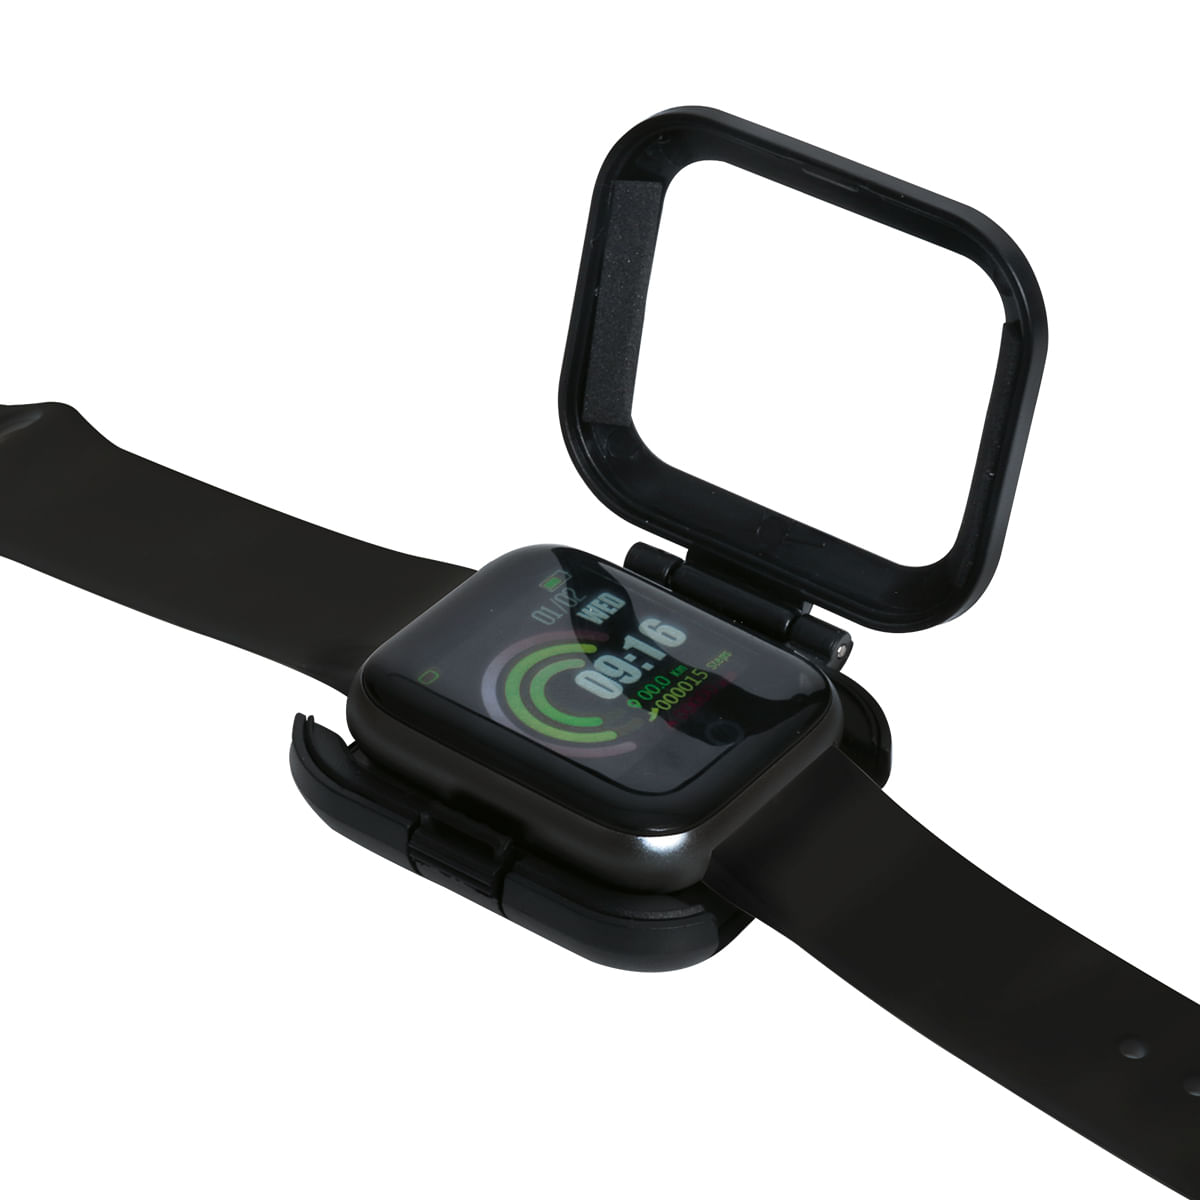 Pulseira Smartwatch Bluetooth 4.0 OEX ACE PS300 Preto Silicone a Prova d'Água Display LCD Colorido - 2